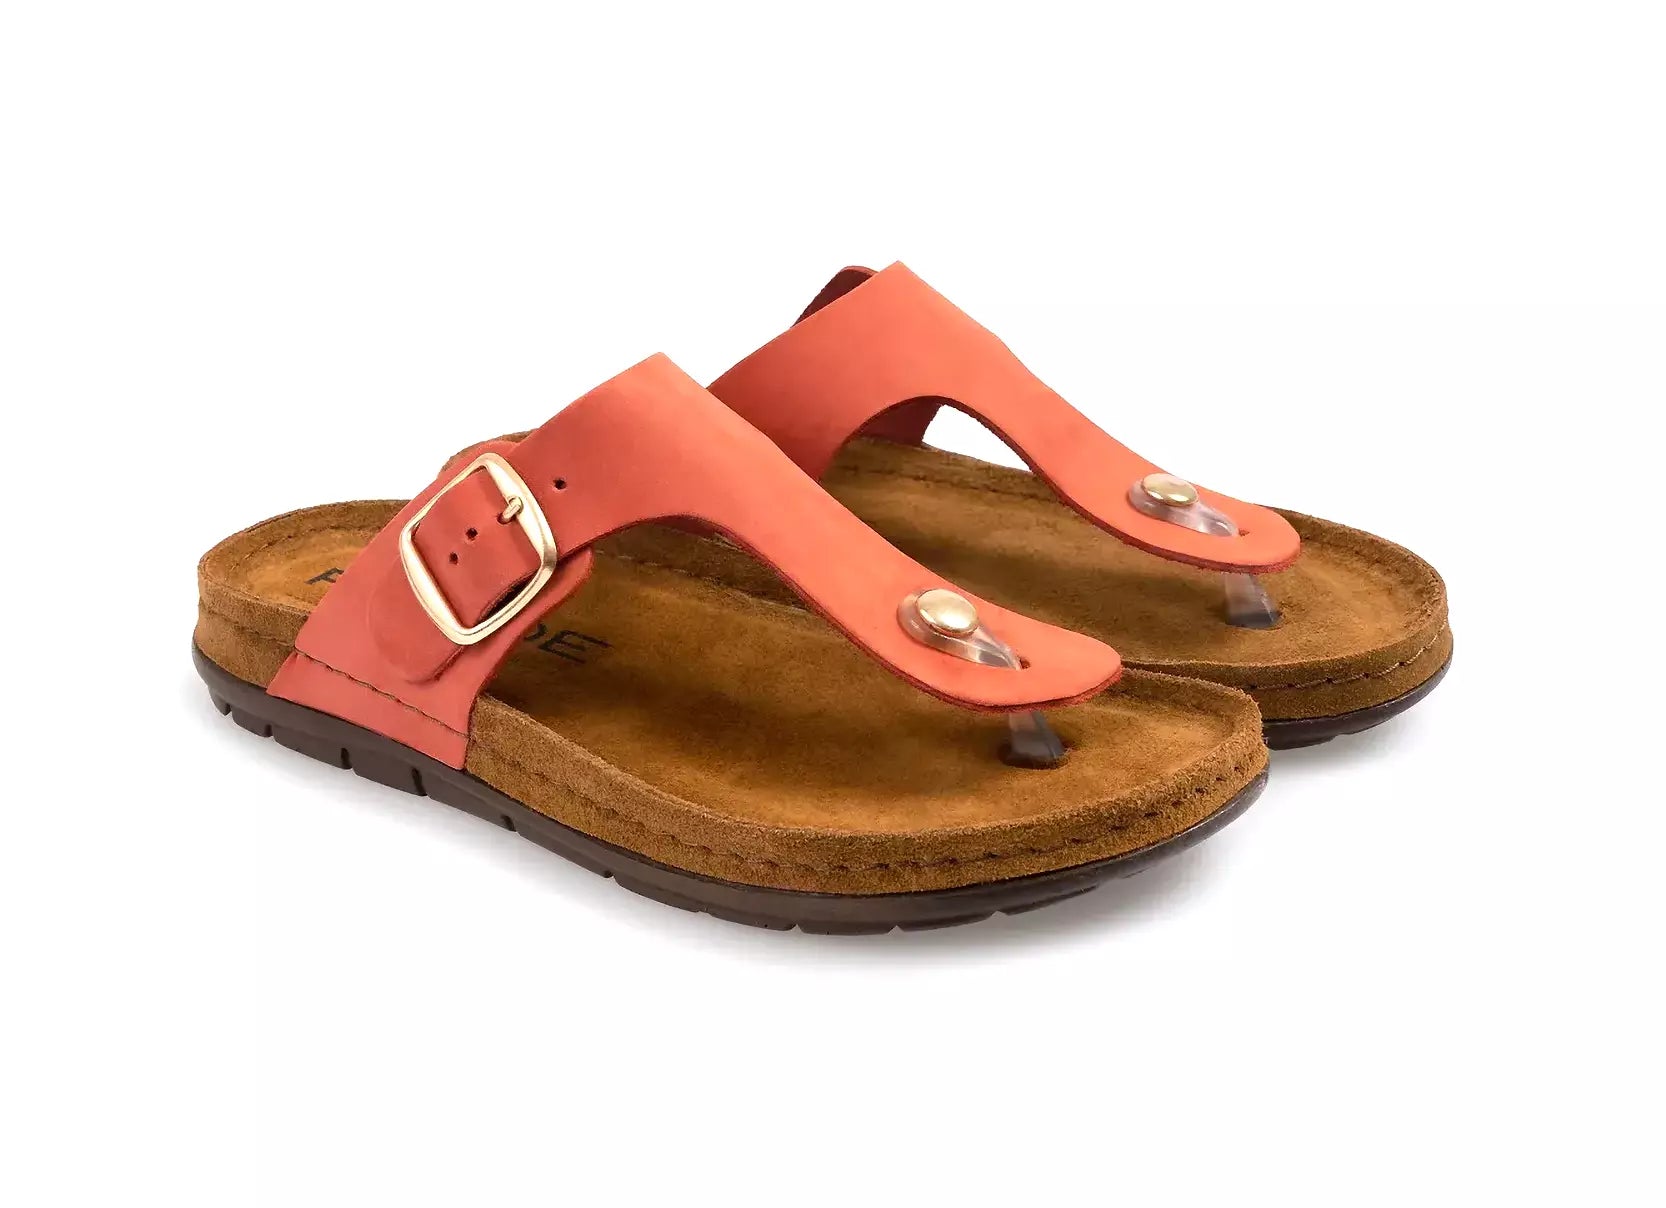 'Rodigo' women's sandal - orange - Chaplinshoes'Rodigo' women's sandal - orangeRohde